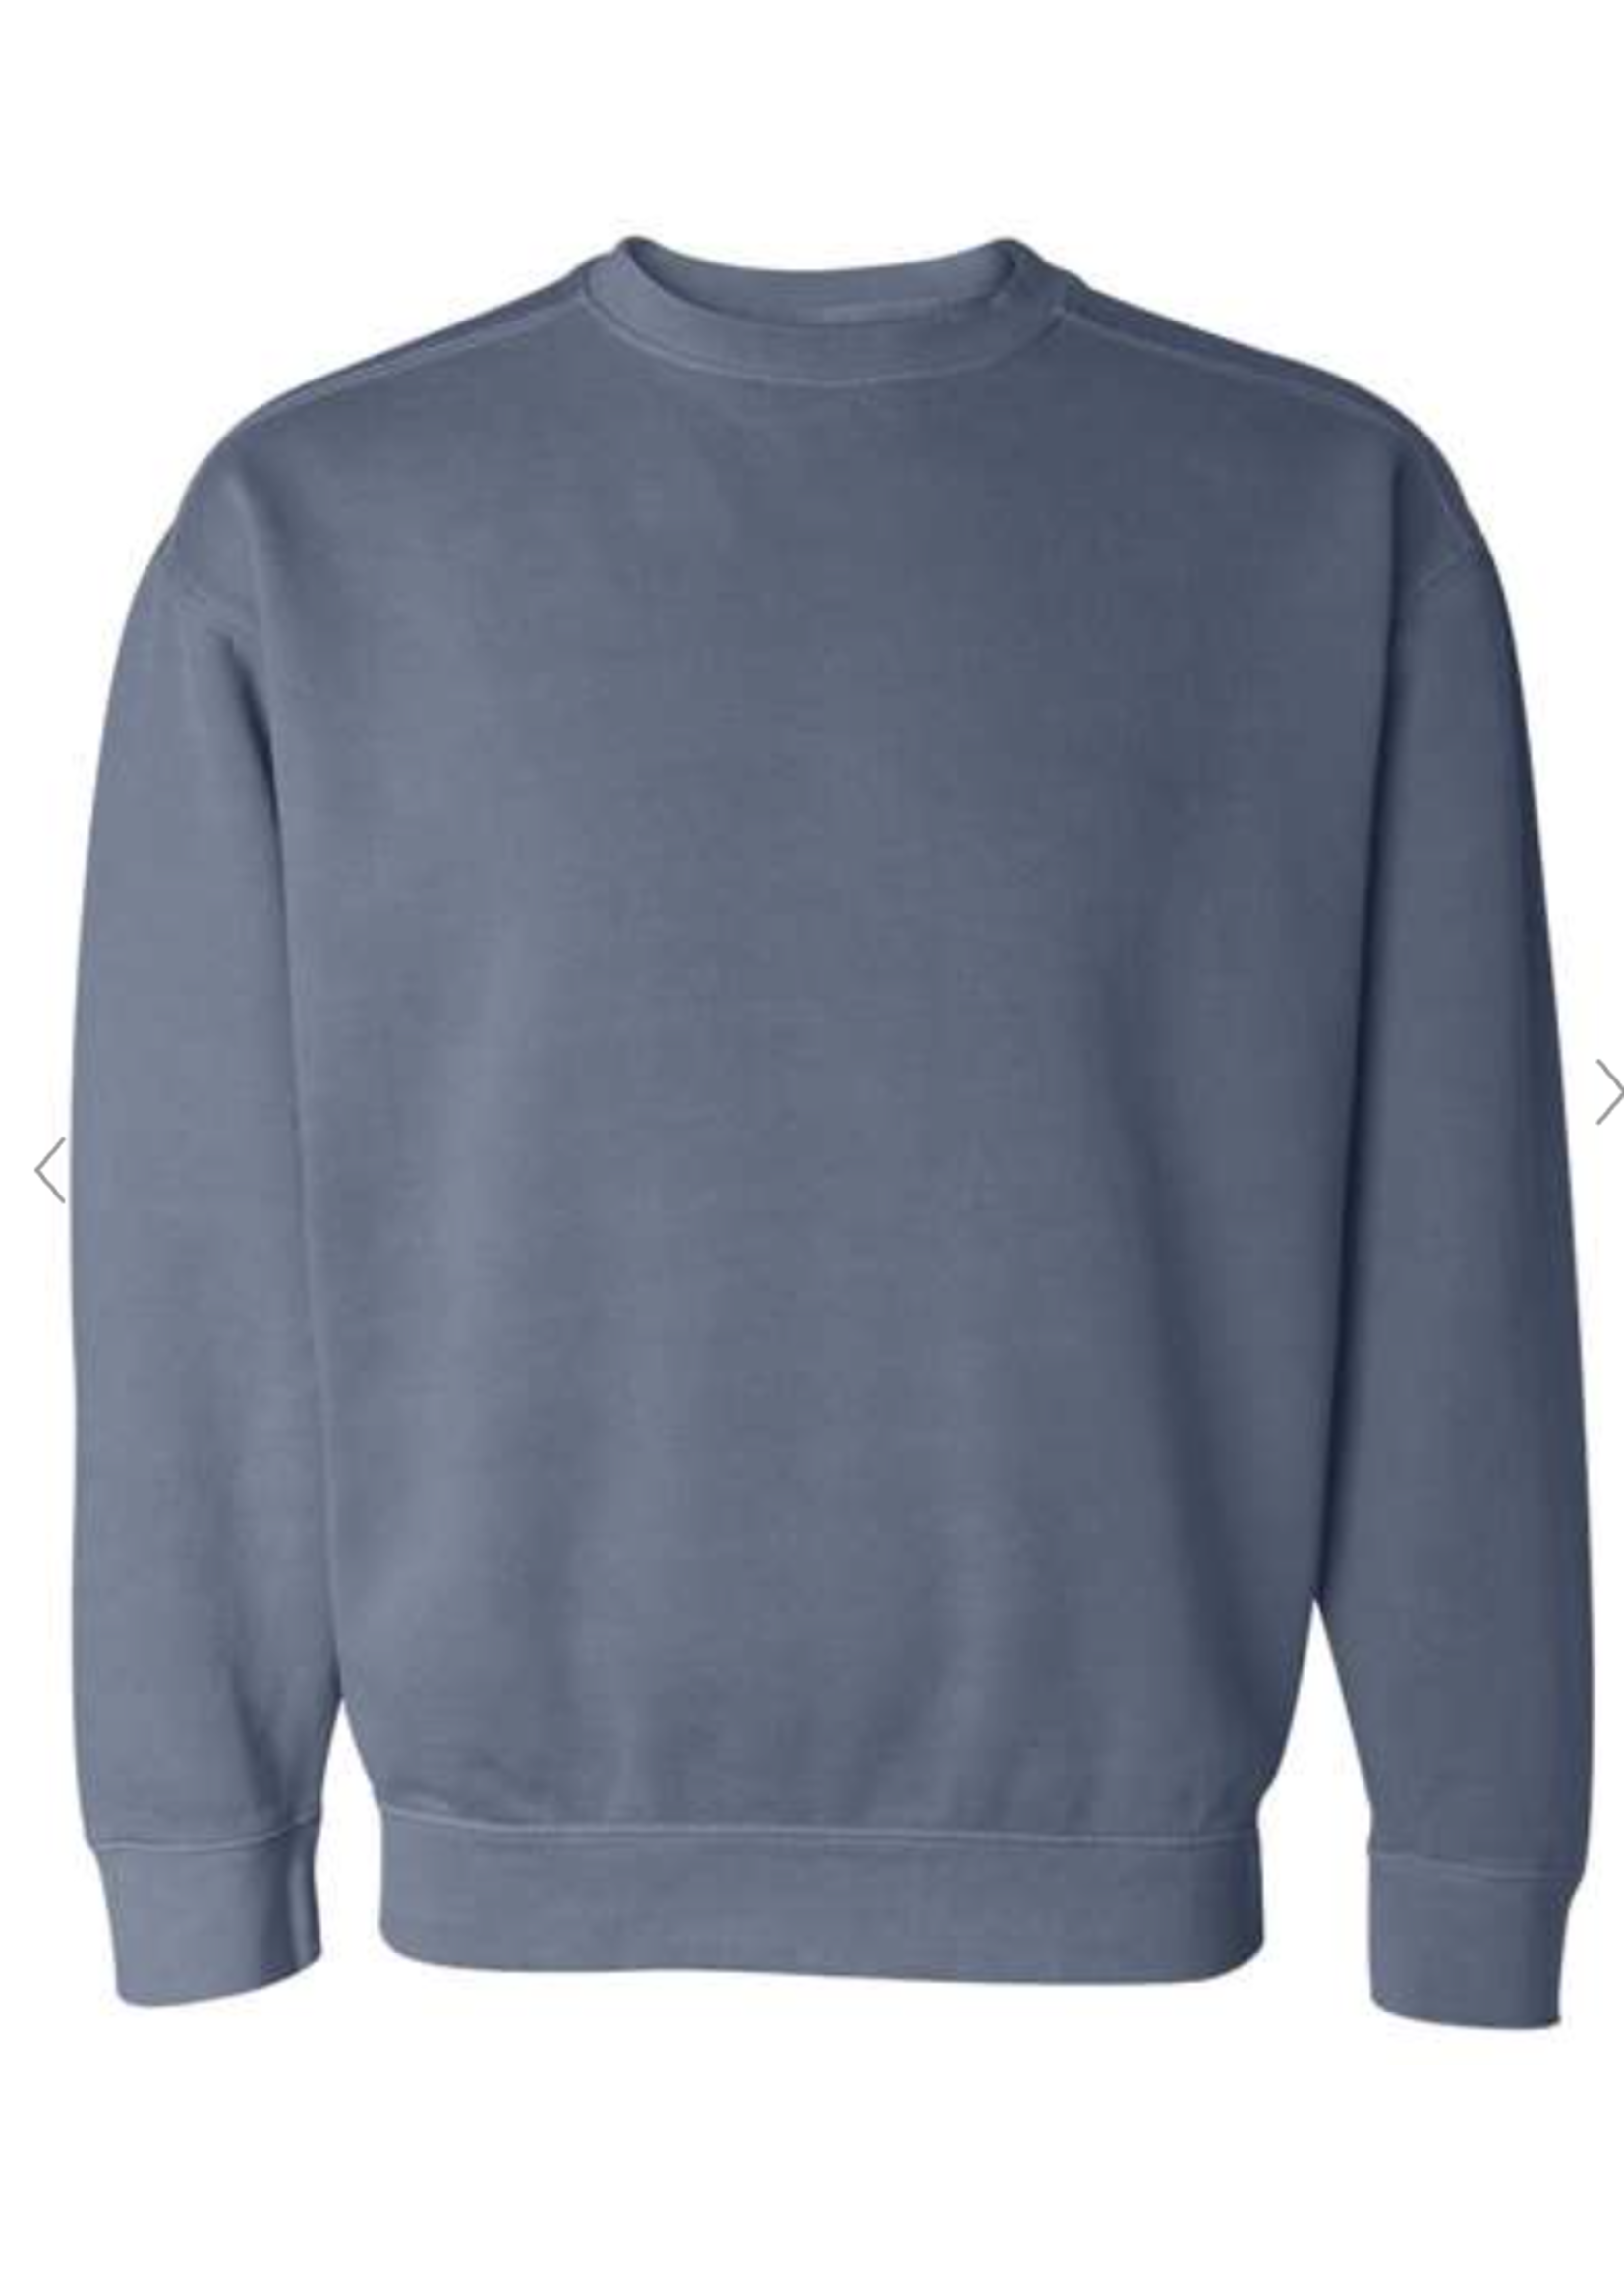 NON-UNIFORM JD Comfort Color Crewneck Sweatshirt